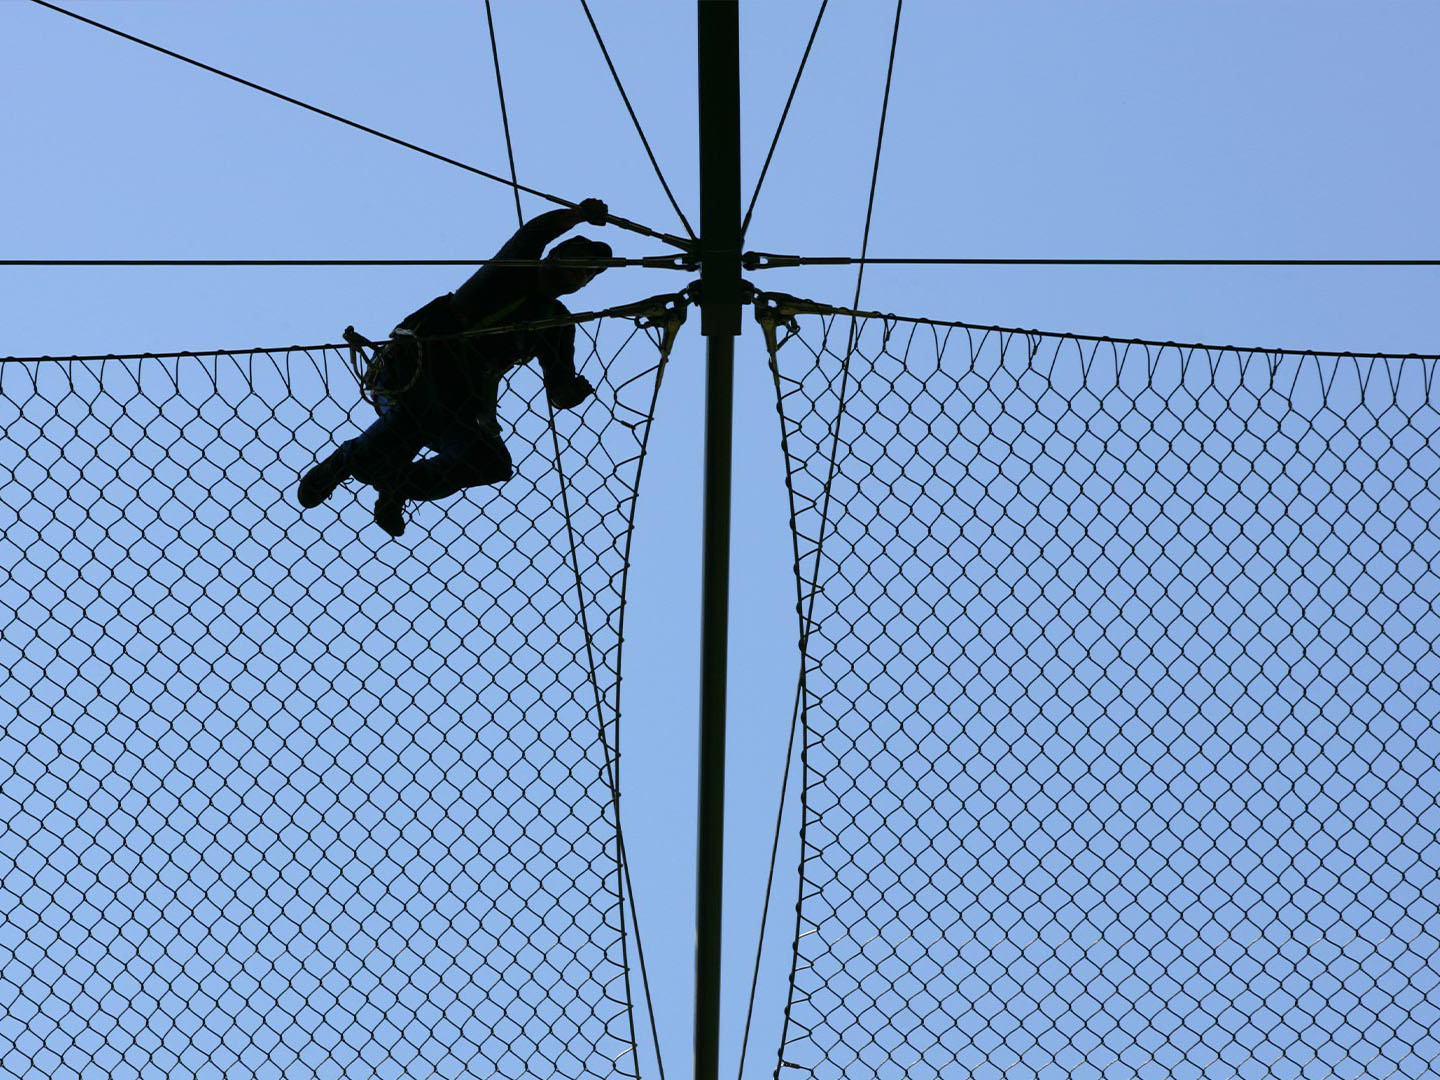 A worker installing a horizontal Webnet safety seen from below